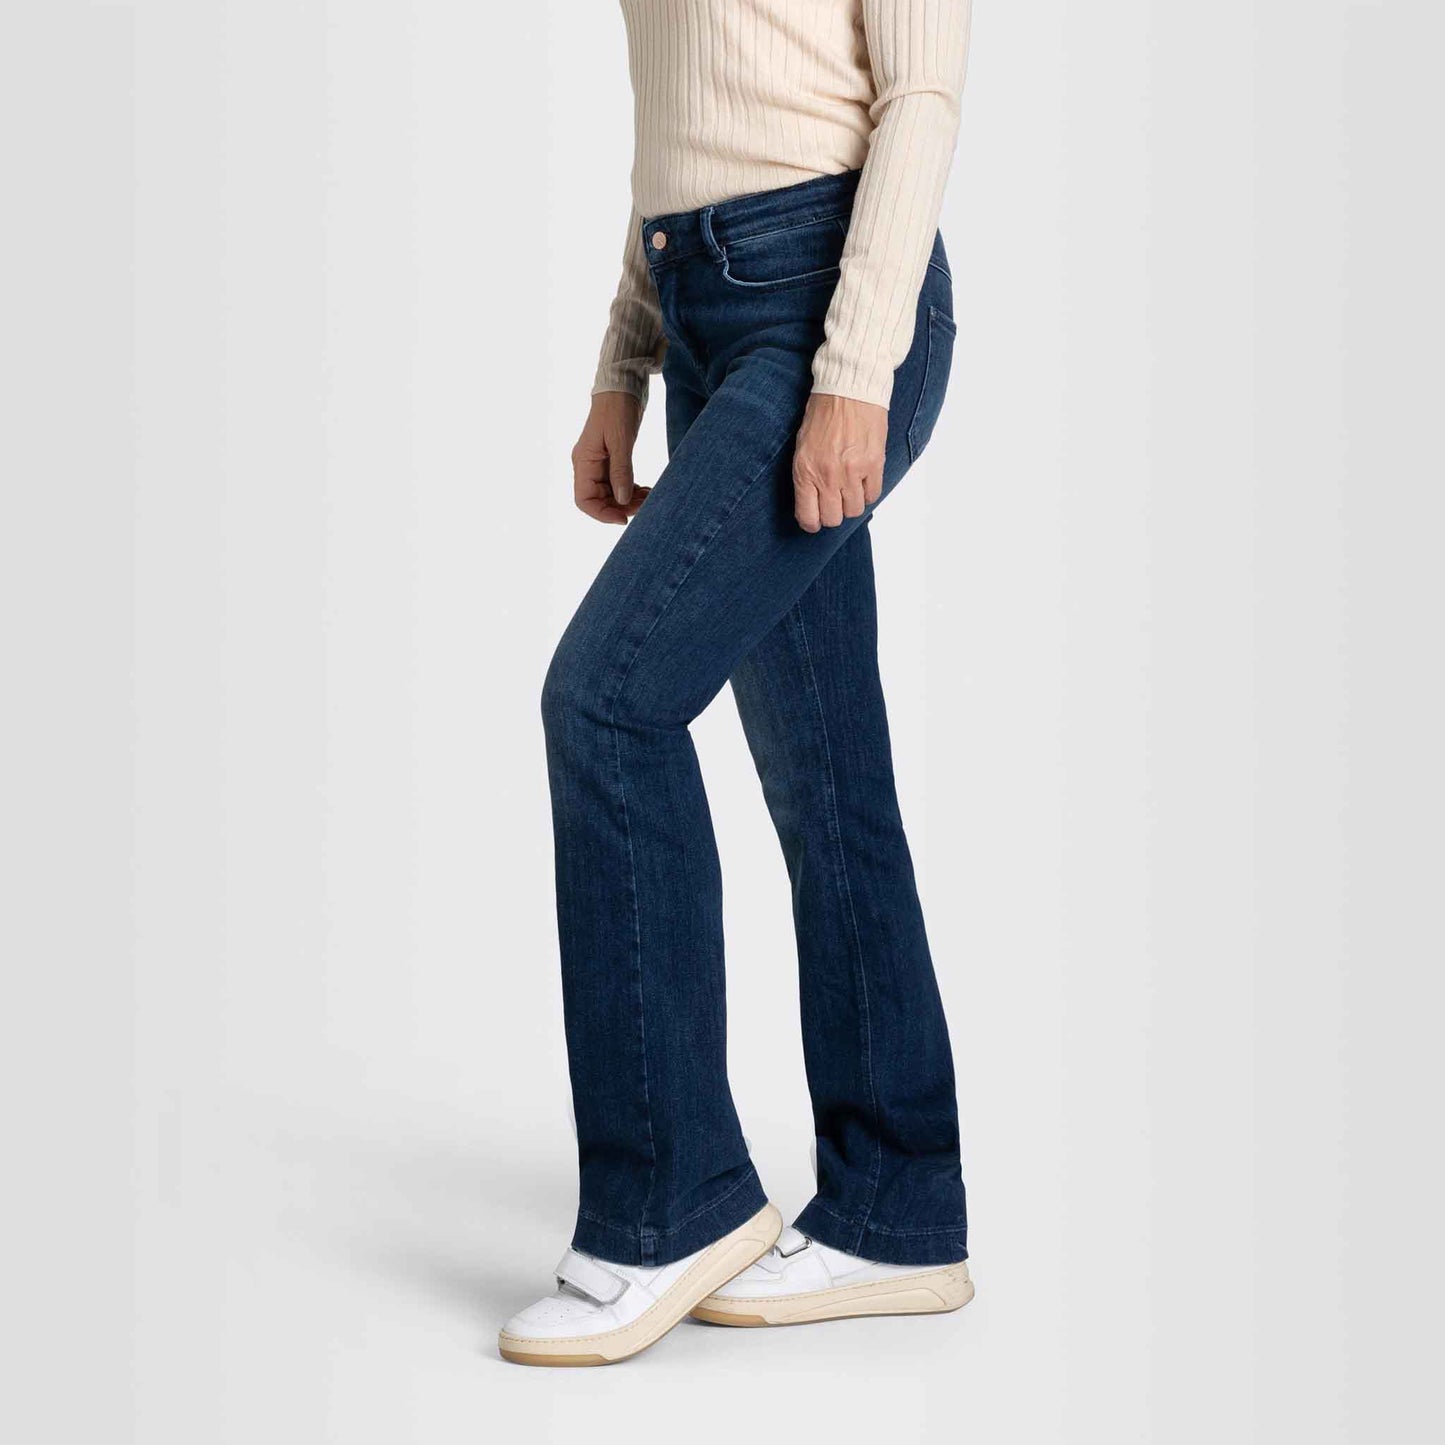 clothing tall women mac jeans dream boot auth cobalt